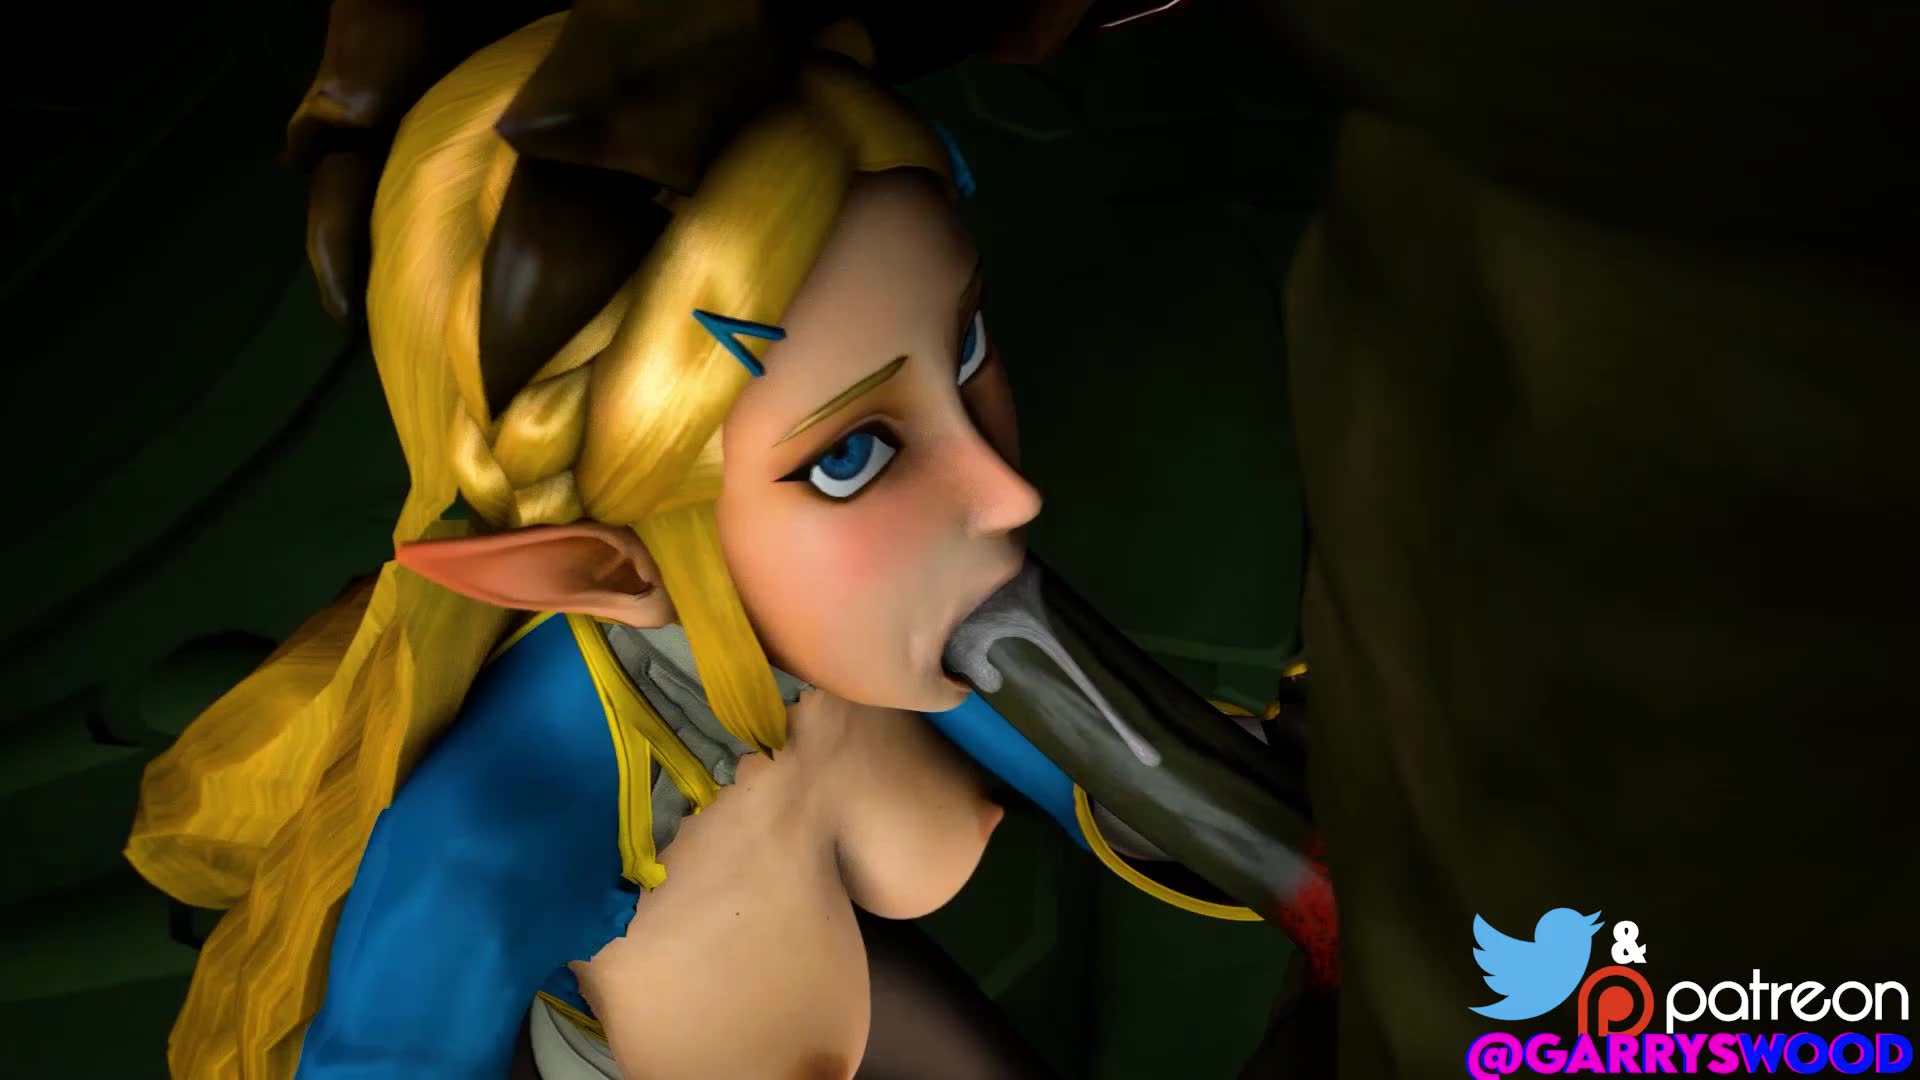 Princess Zelda Gives Deepthroat Blowjob To Huge Penis – The Legend Of Zelda NSFW animation thumbnail